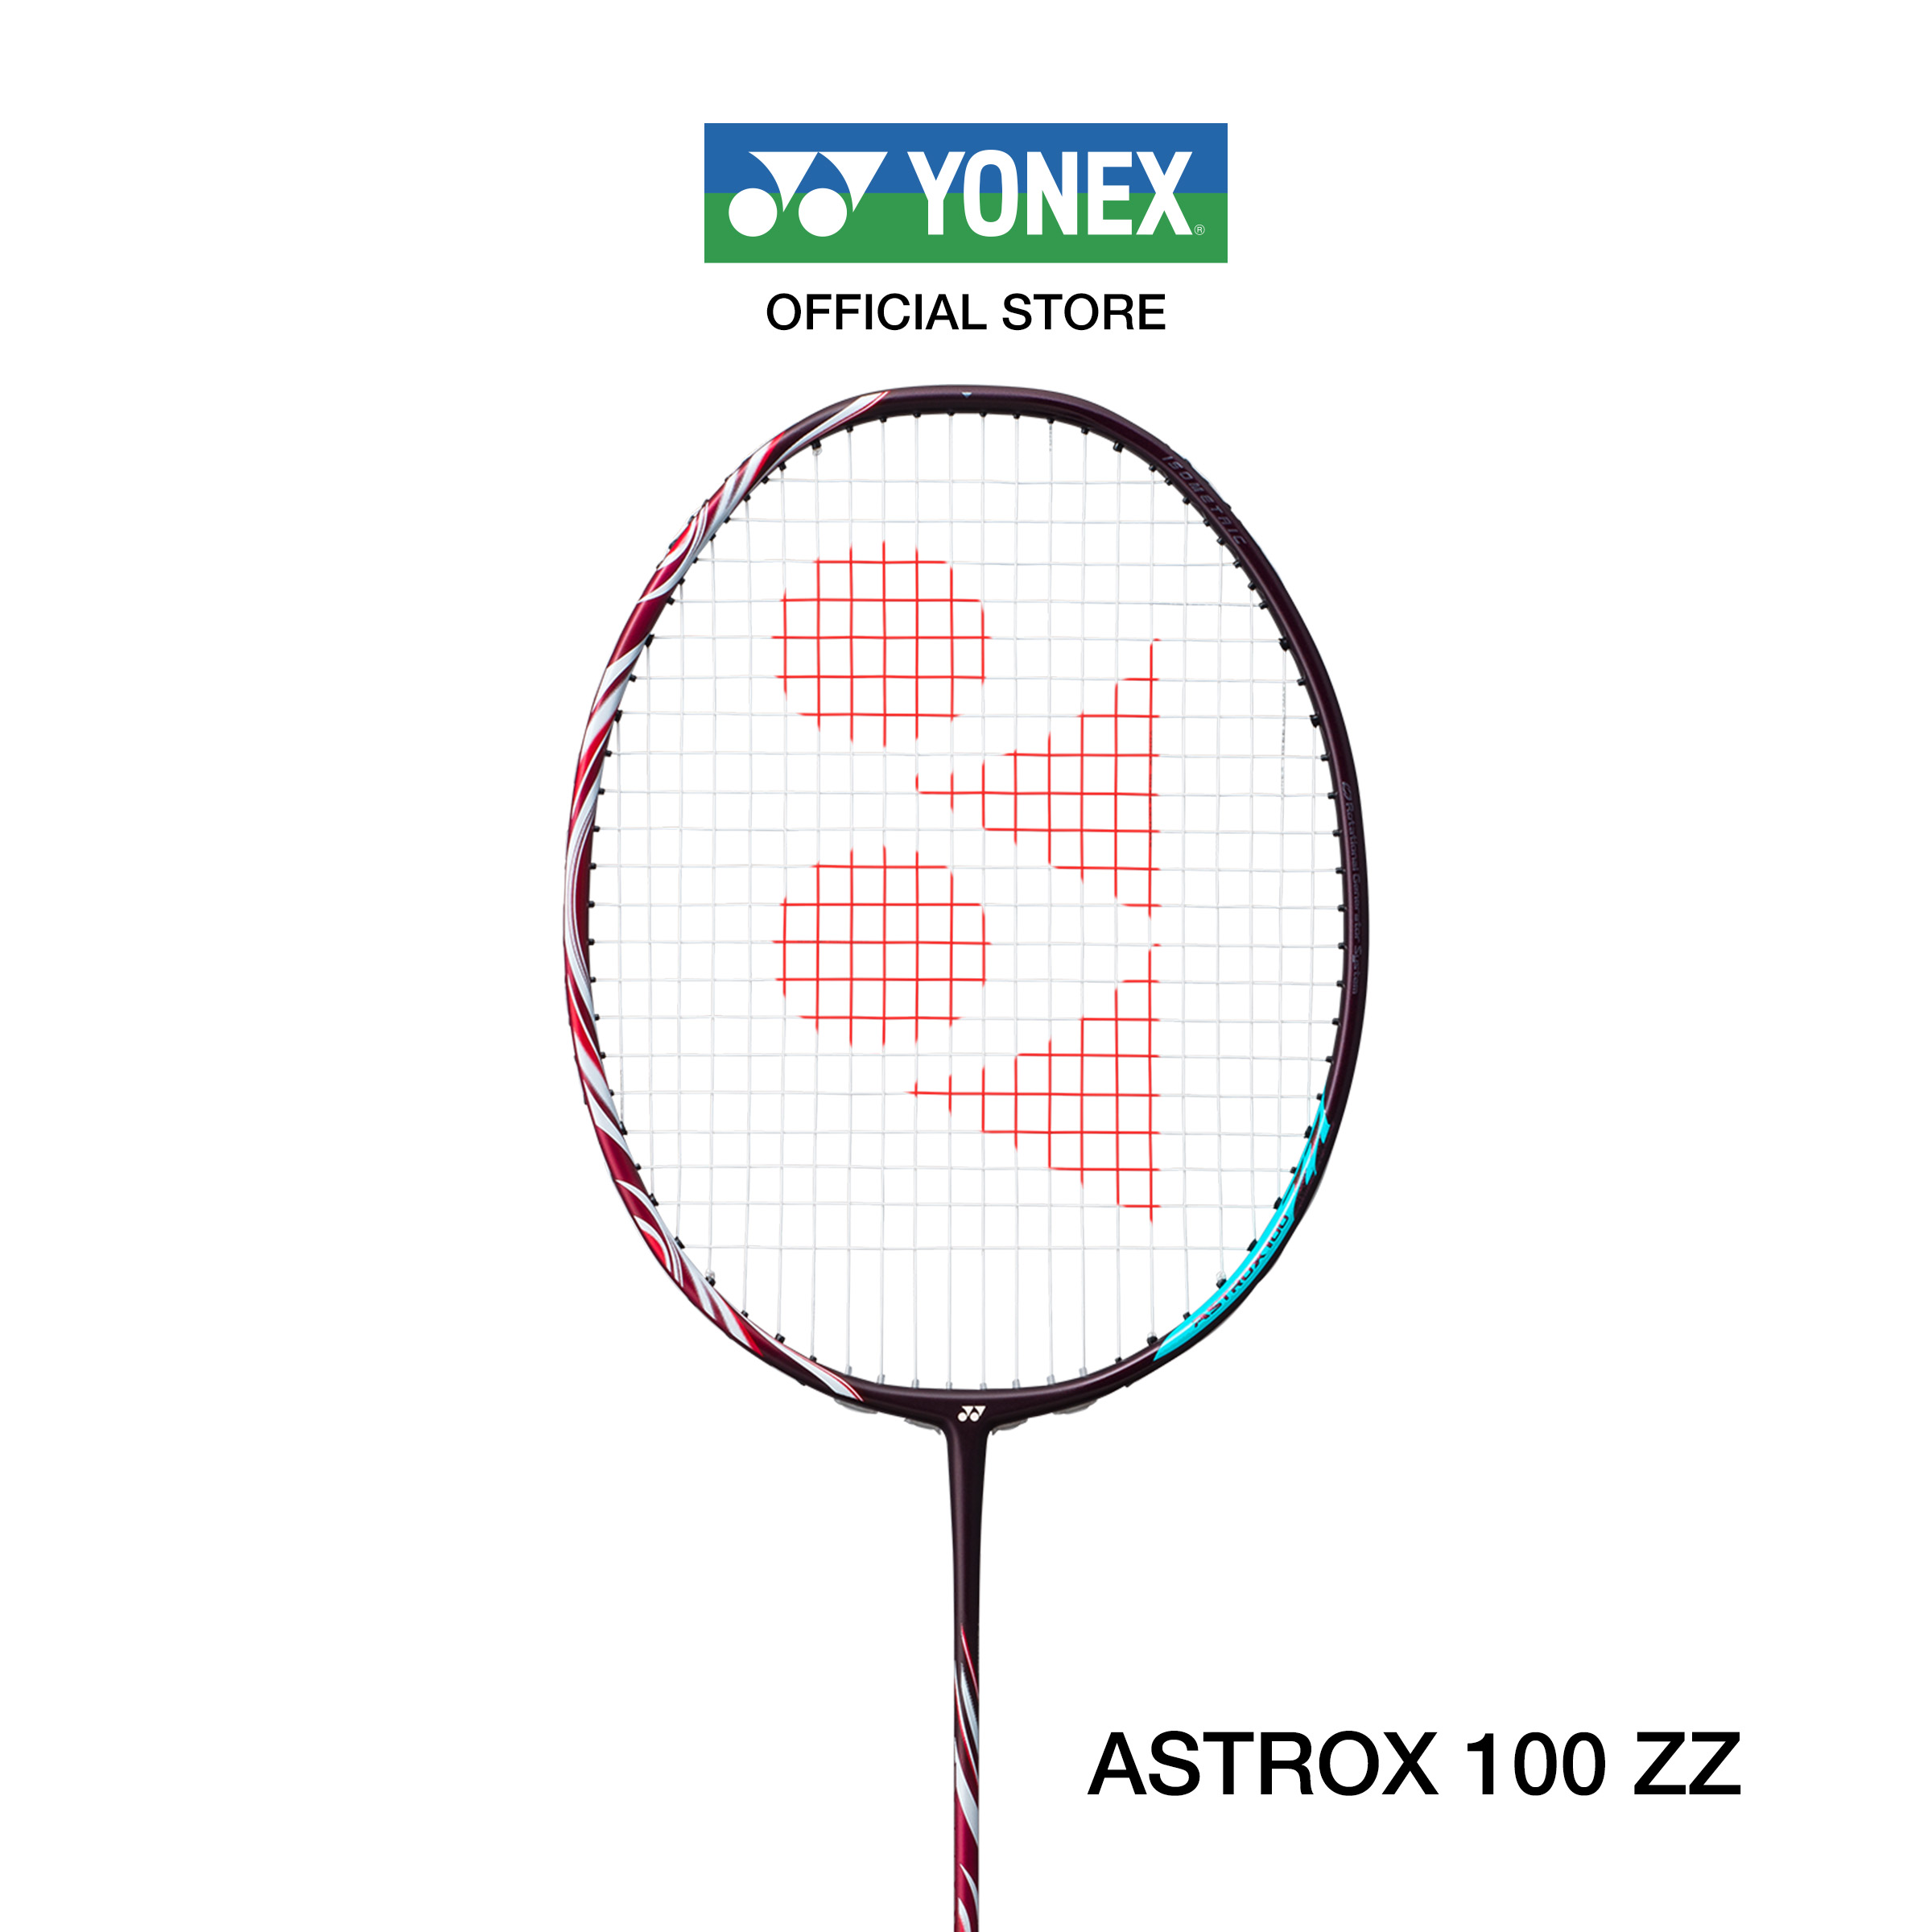 YONEX ไม้แบดมินตัน รุ่น ASTROX 100 ZZ ไม้หัวหนัก ก้านแข็งมาก เหมาะสำหรับผู้เล่นสายพลังที่ชอบเล่นเกมบุก แถมเอ็น BG65